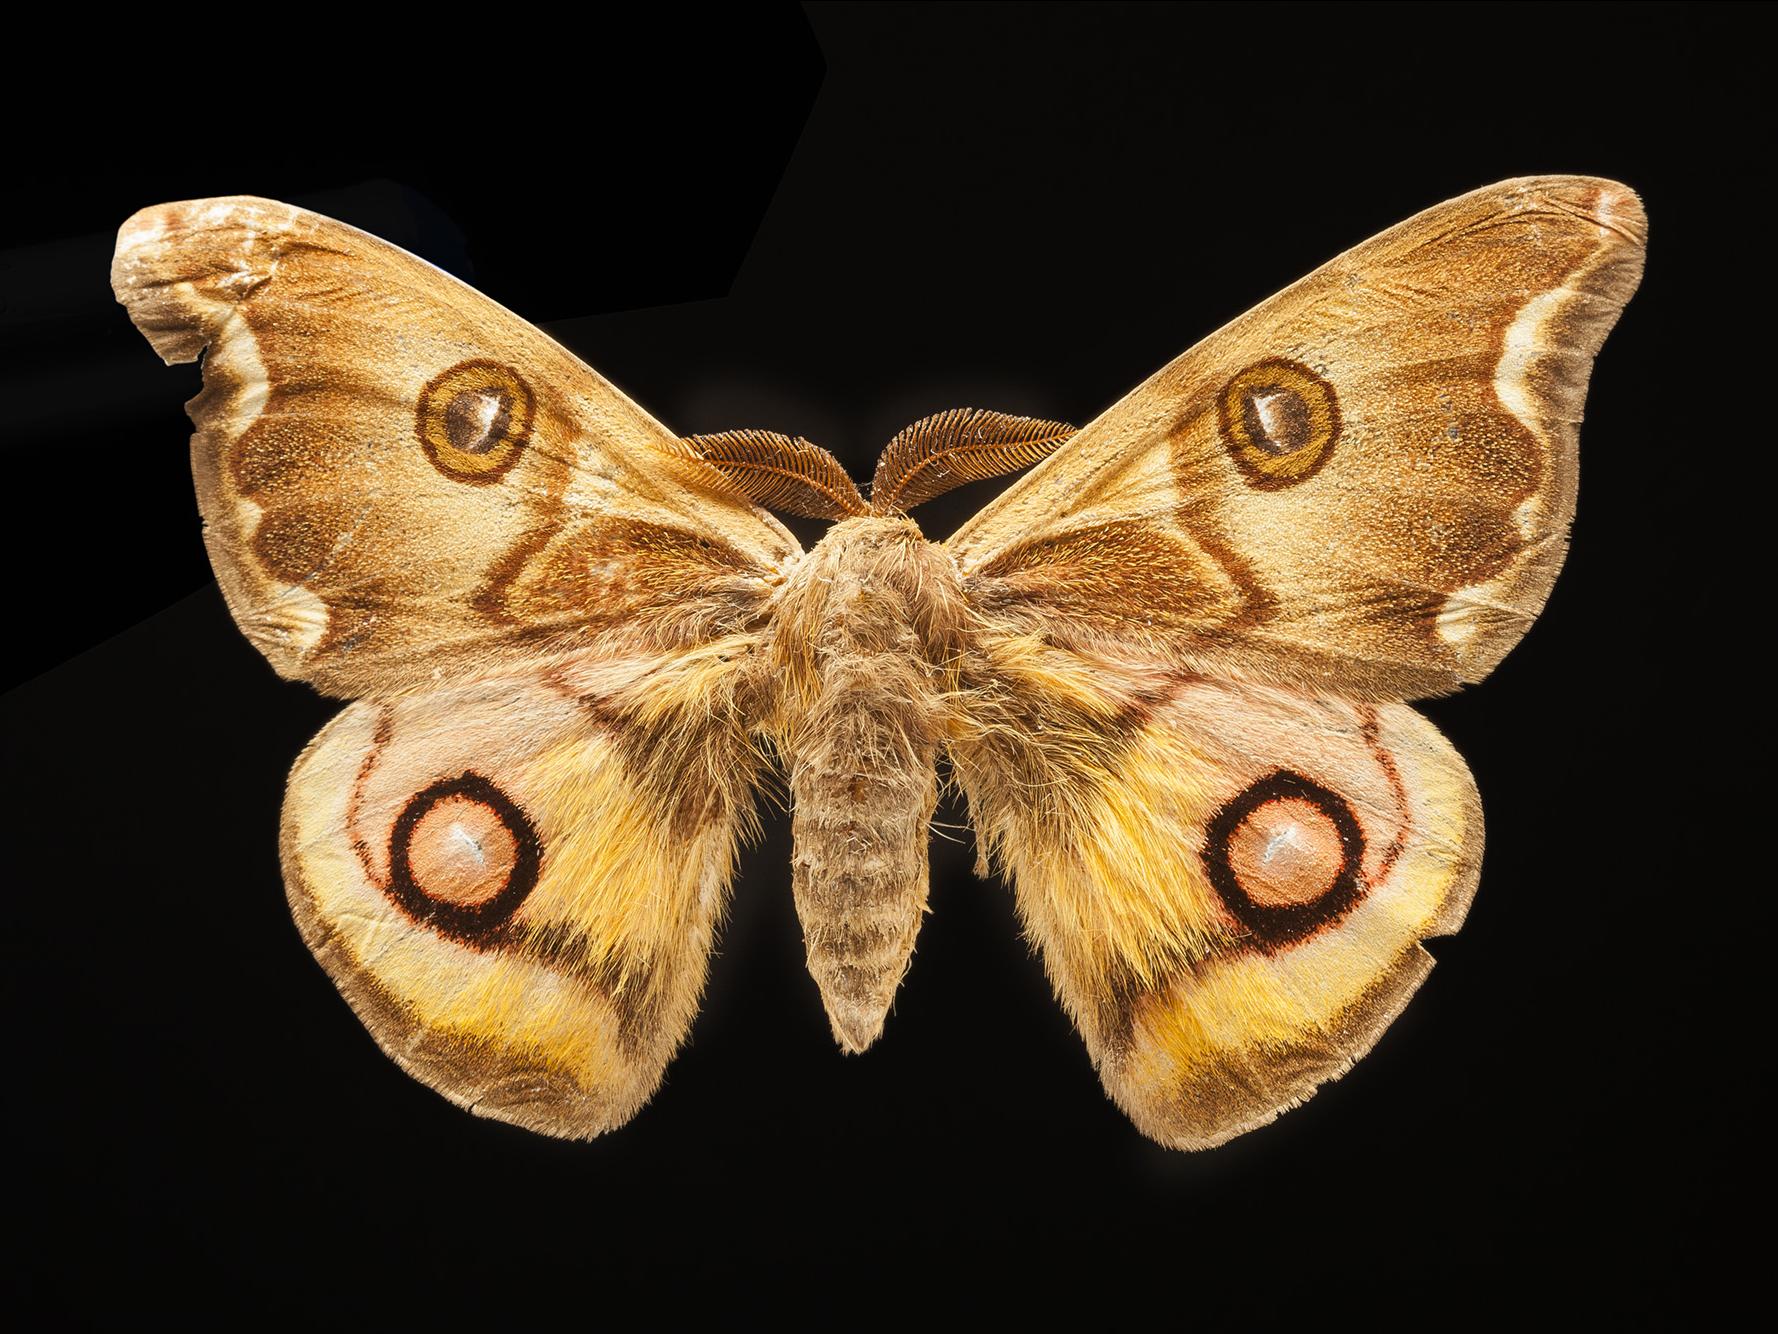 Polythysana cinerascens (Philippi, 1859)